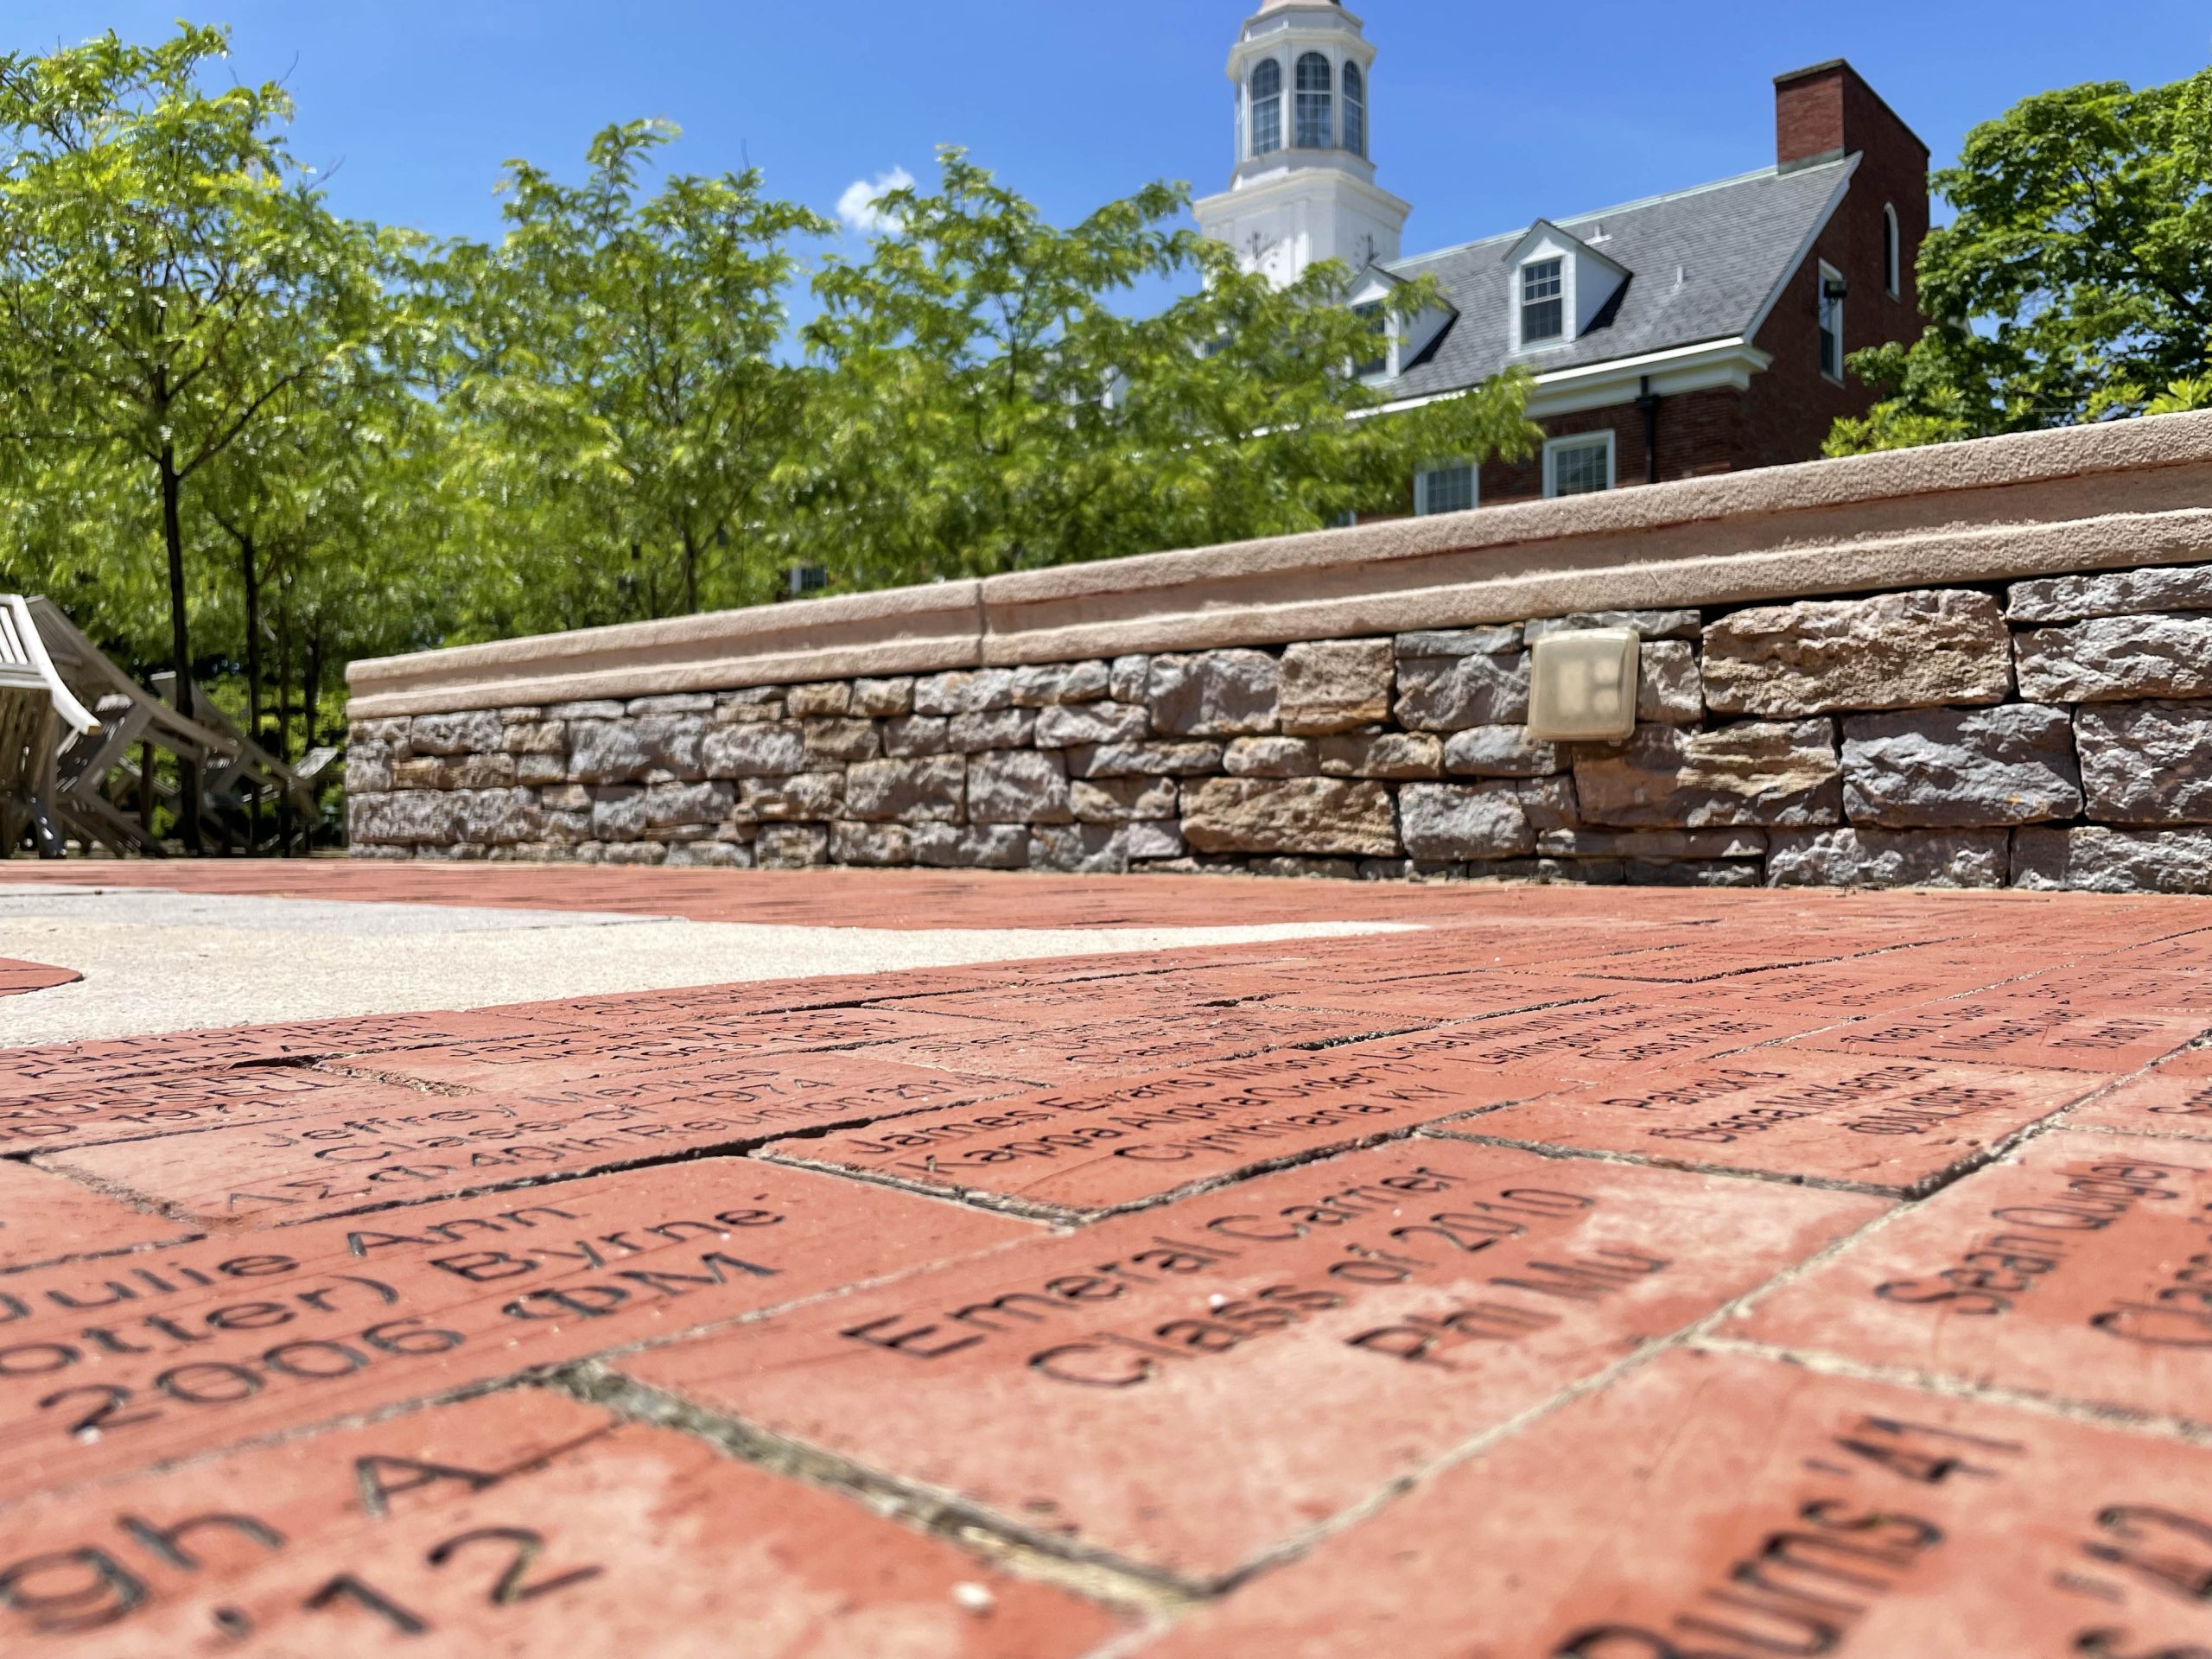 Families: Celebrate your ’22 graduate with commemorative Alumni Plaza brick or paver